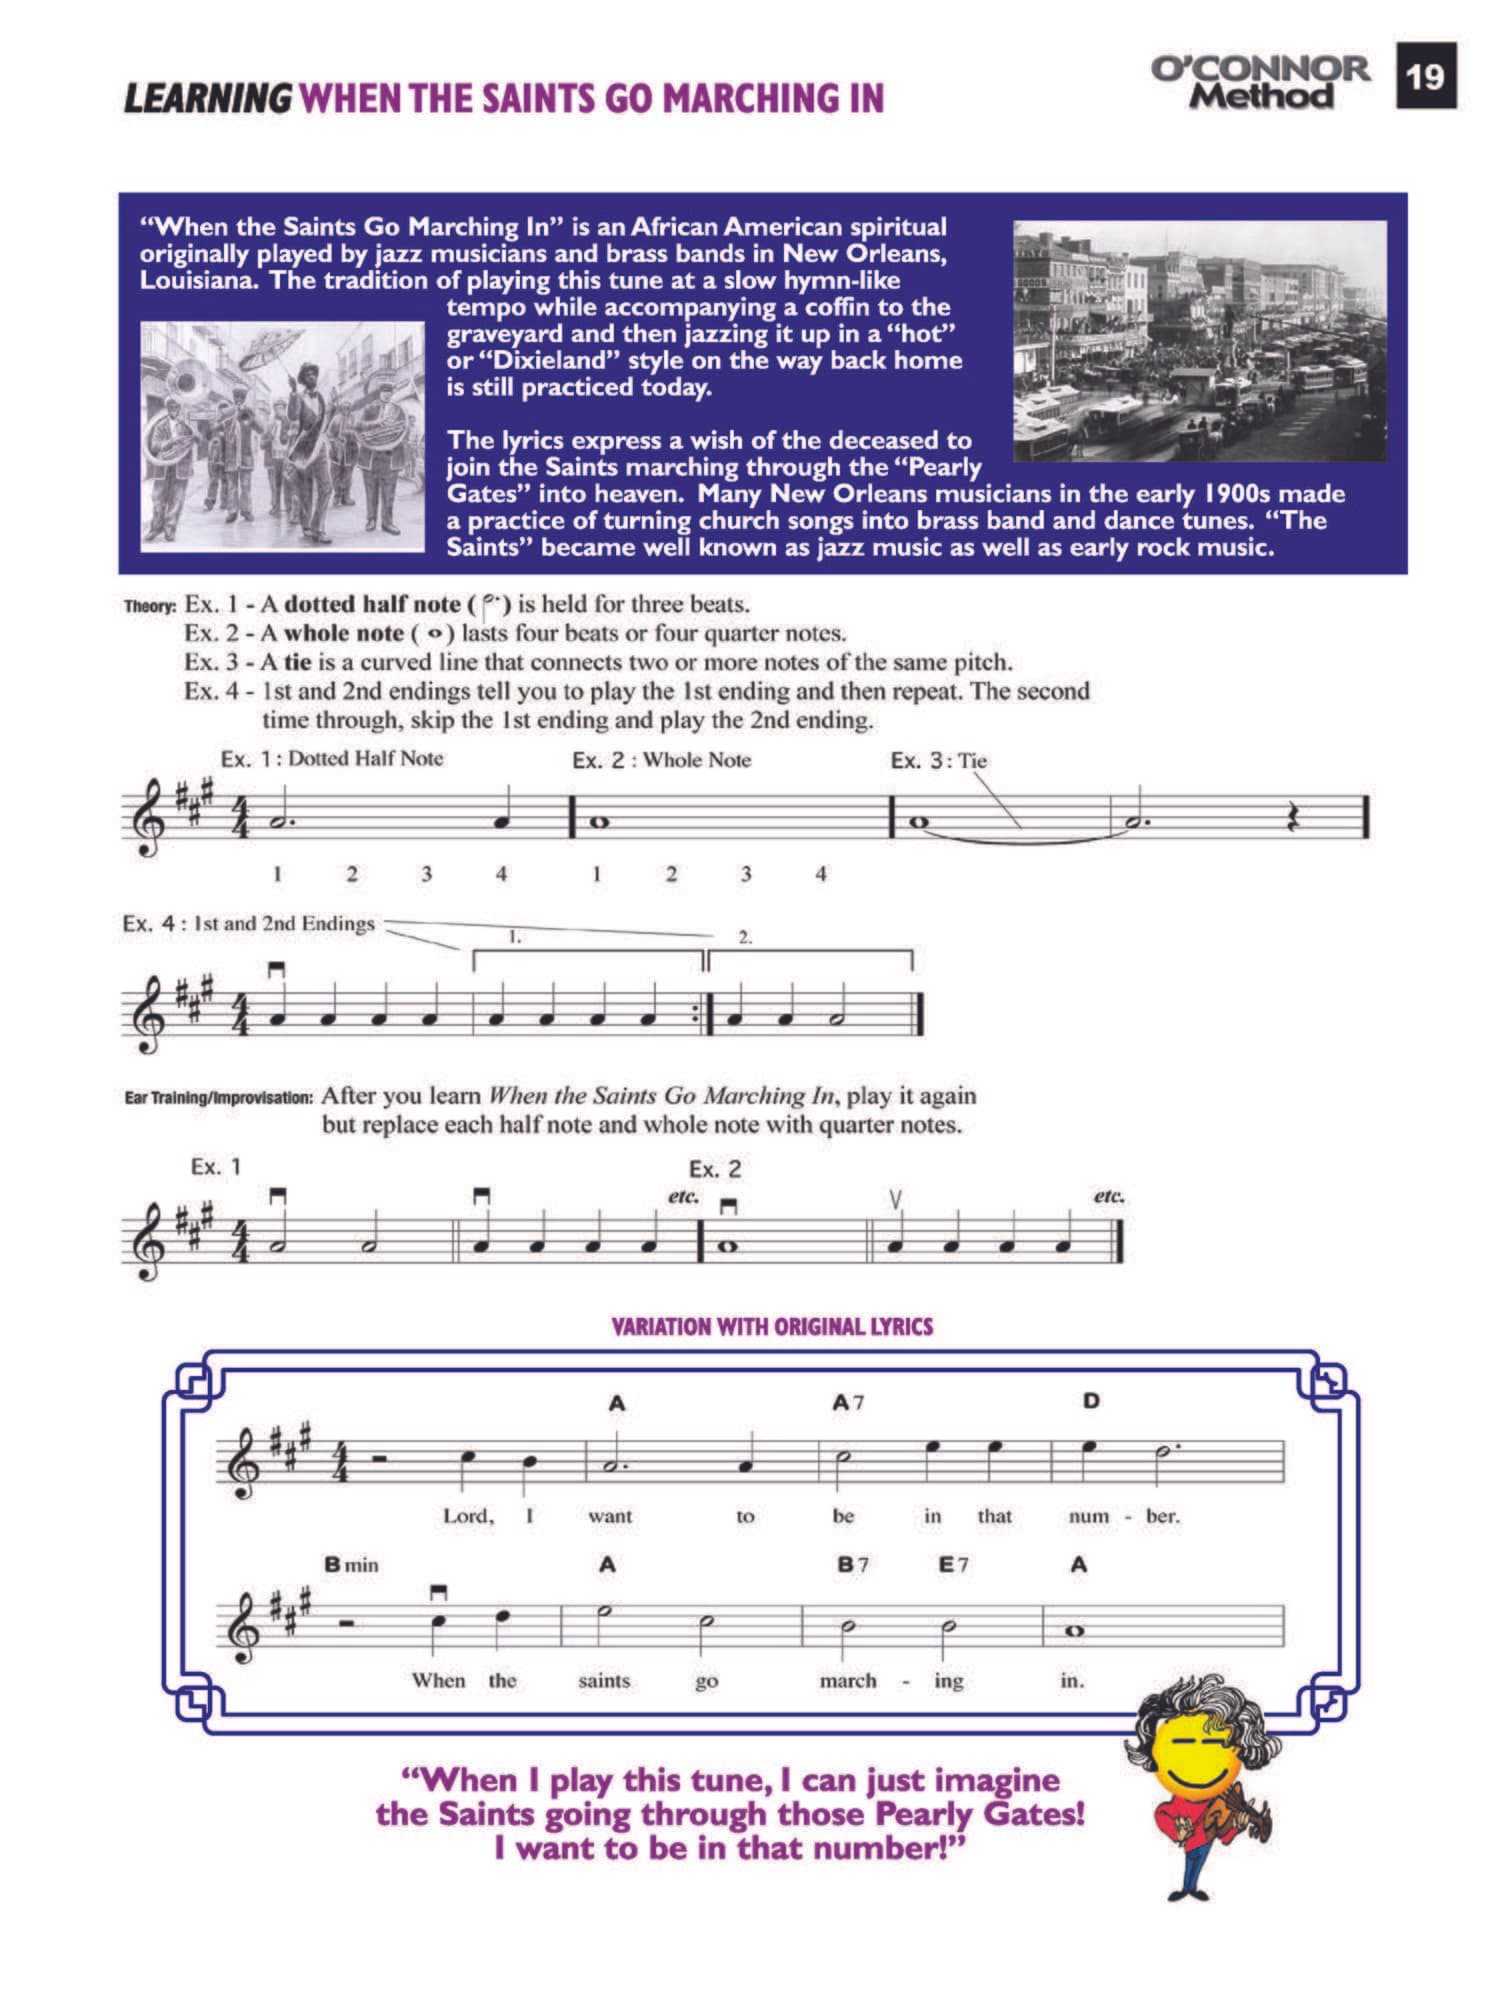 O'Connor Violin Method Book I - Digital Download